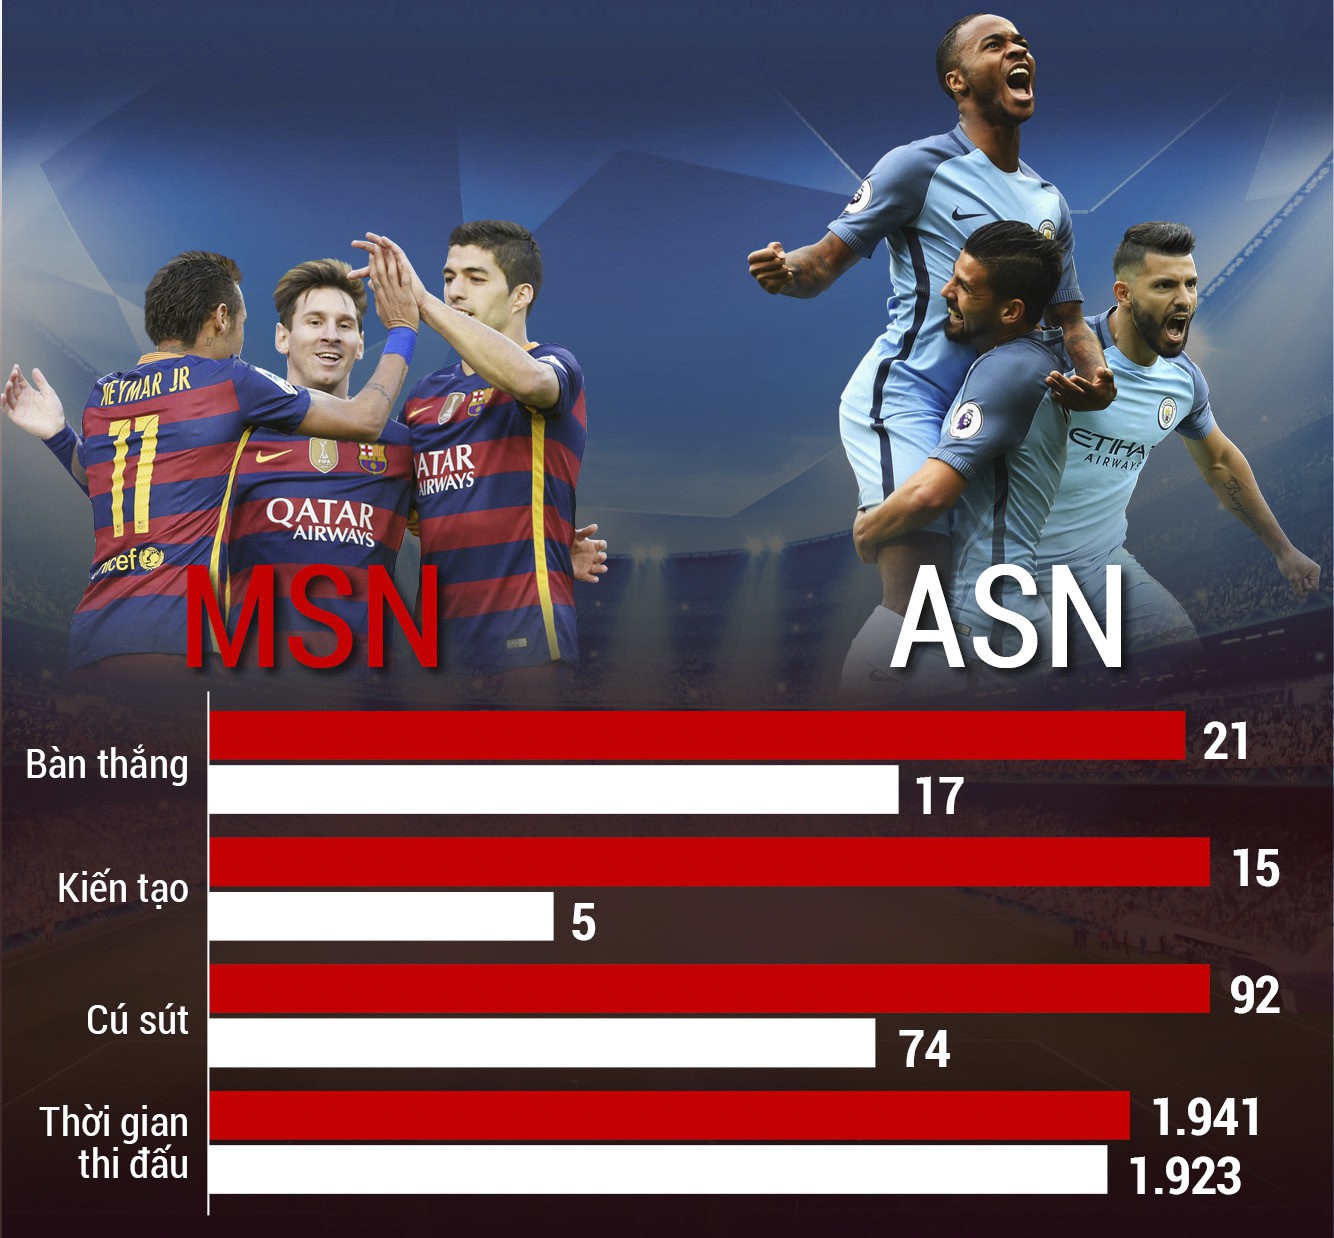 Barcelona-Man City: MSN ăn đứt “ASN”